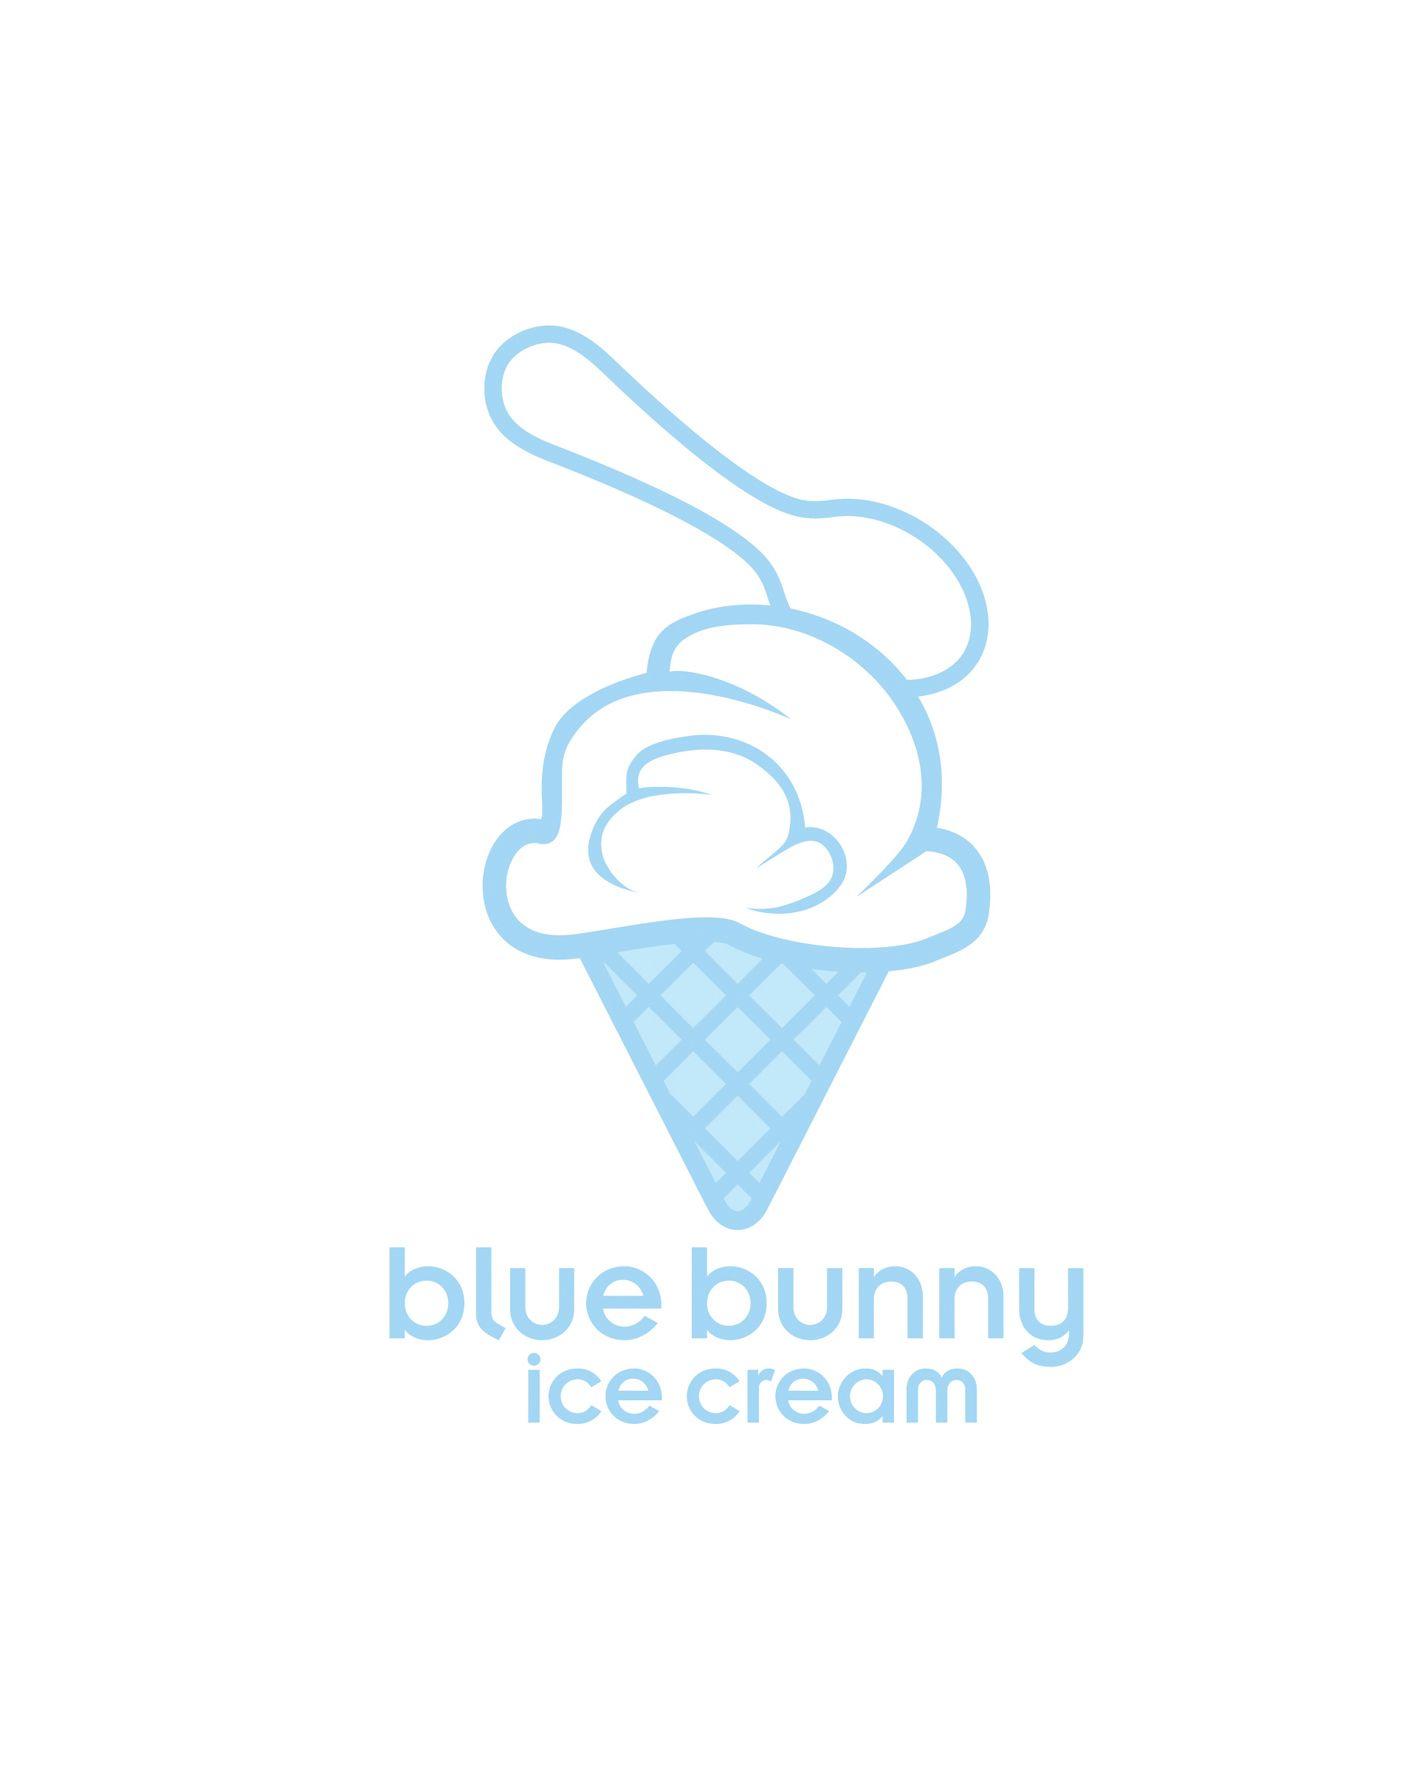 Blue Bunny Ice Cream Logo - Blue Bunny Ice Cream LOGO by Adrian Ramirez | Rabbit | Pinterest ...